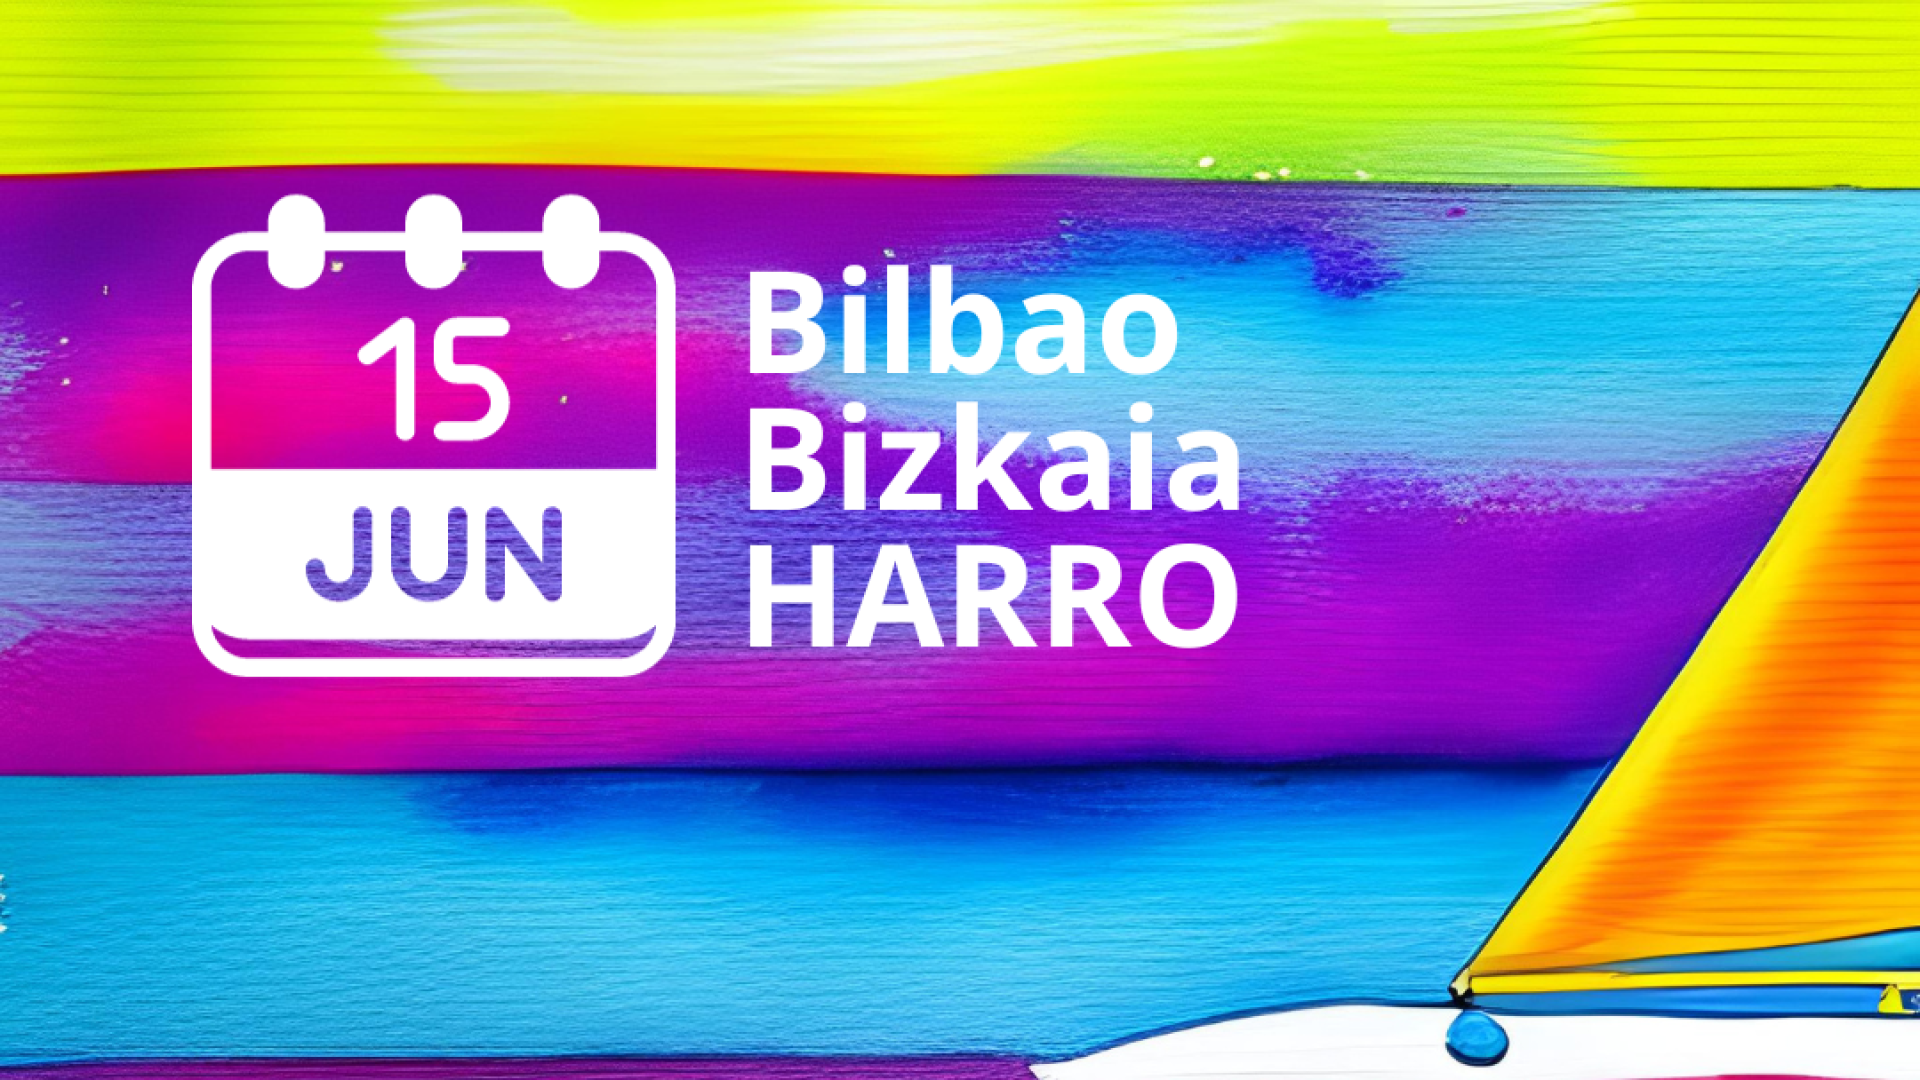 Bilbao-Bizkaia-HARRO-1